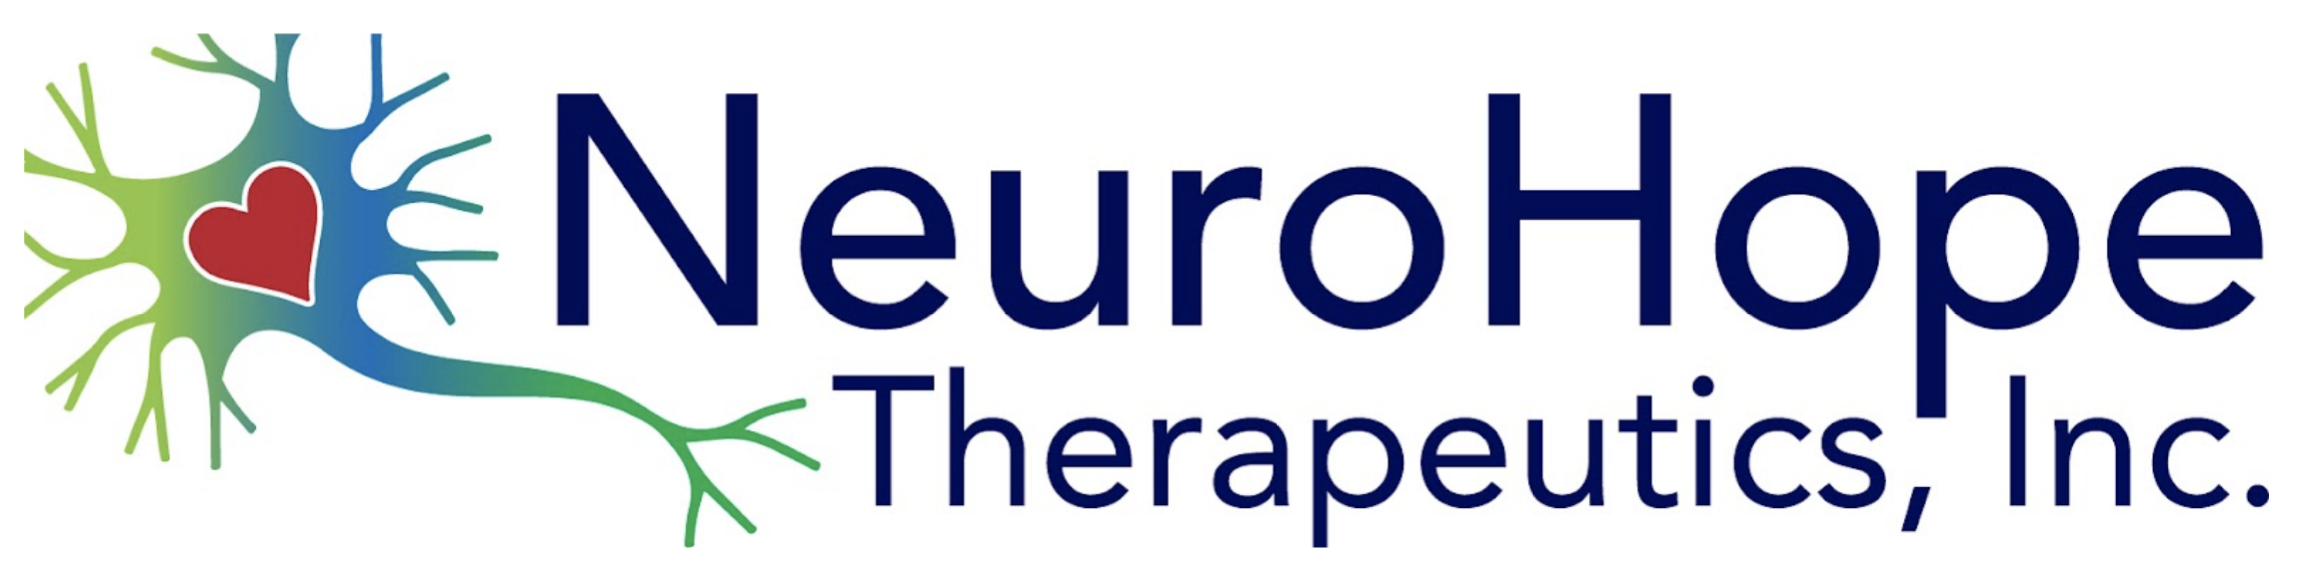 NeuroHope Therapeutics logo